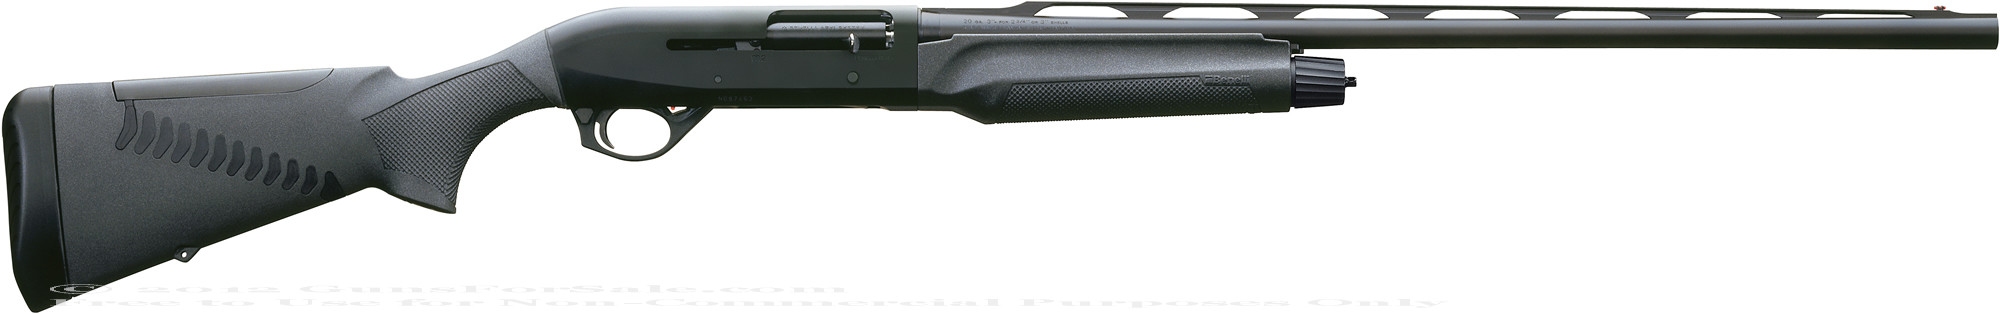 Benelli M2 20 GA Field Shotgun